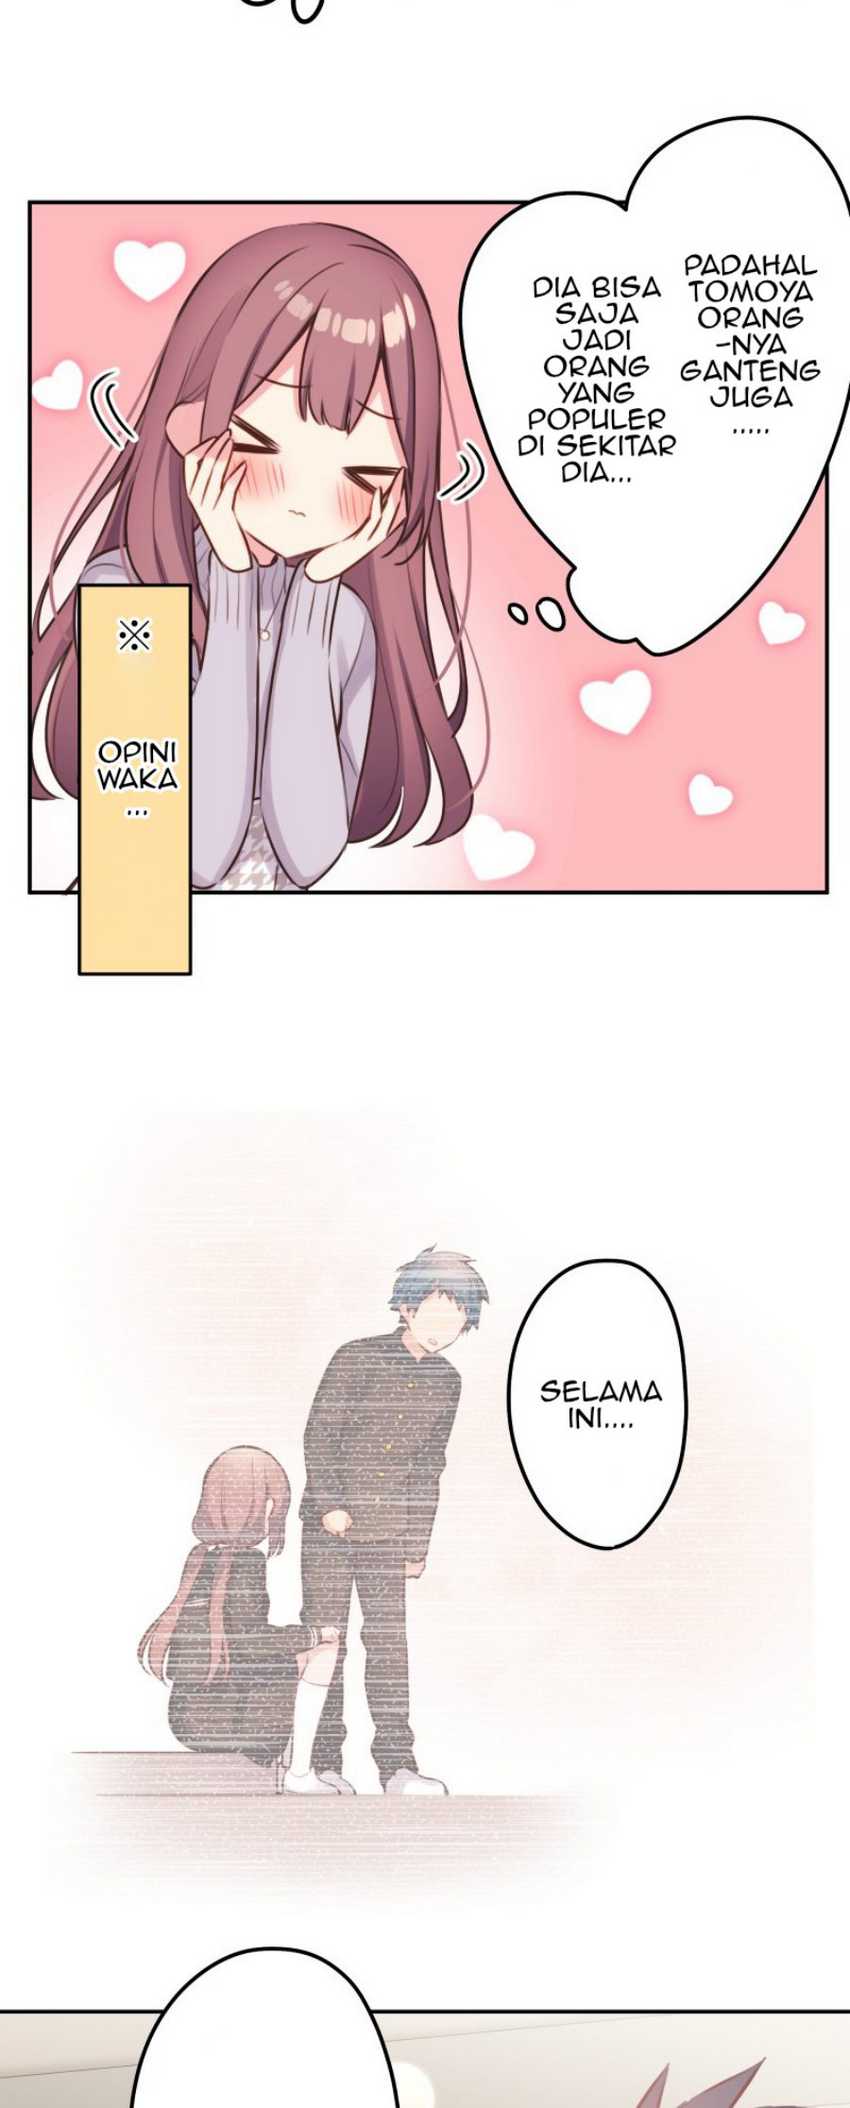 Waka-chan Is Flirty Again Chapter 109